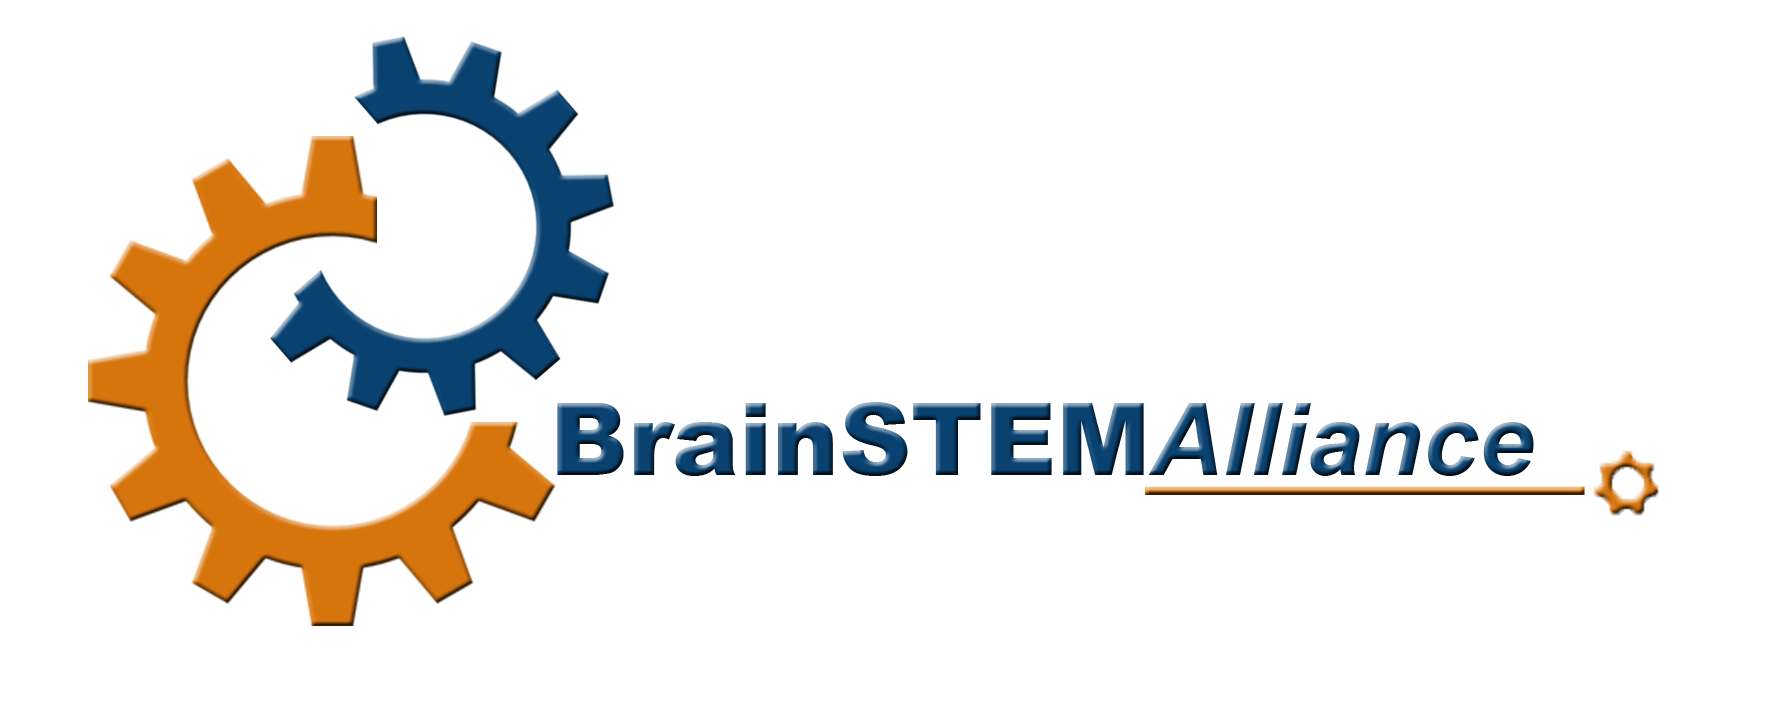 BrainSTEM alliance logo